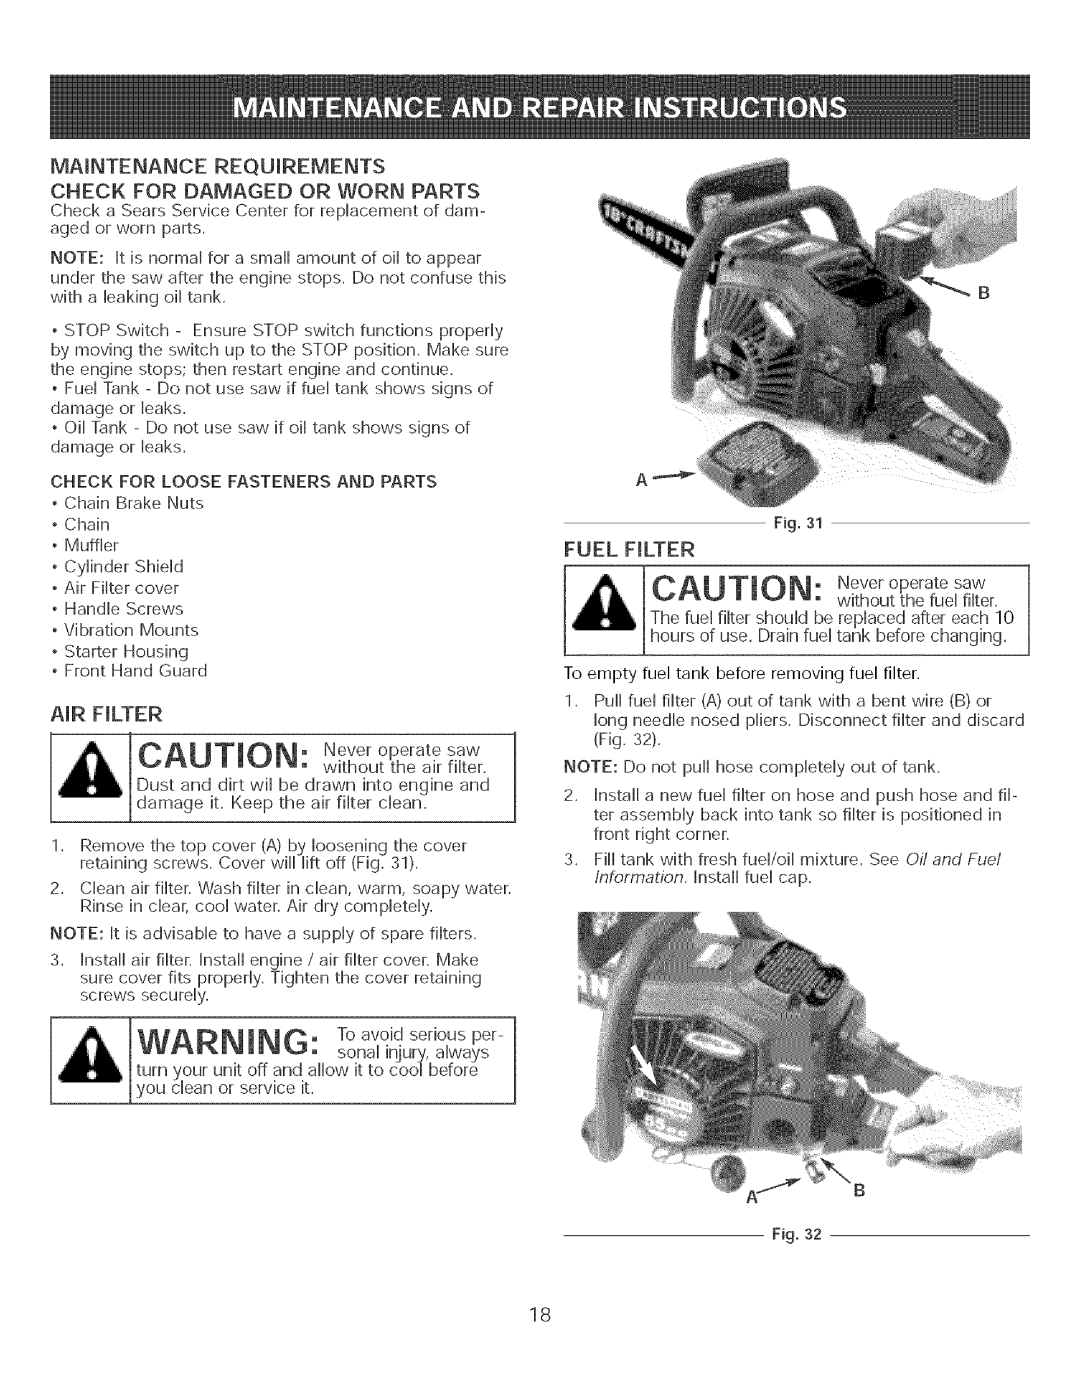 Craftsman 316.35084 manual AiR FILTER, Fuel Filter 